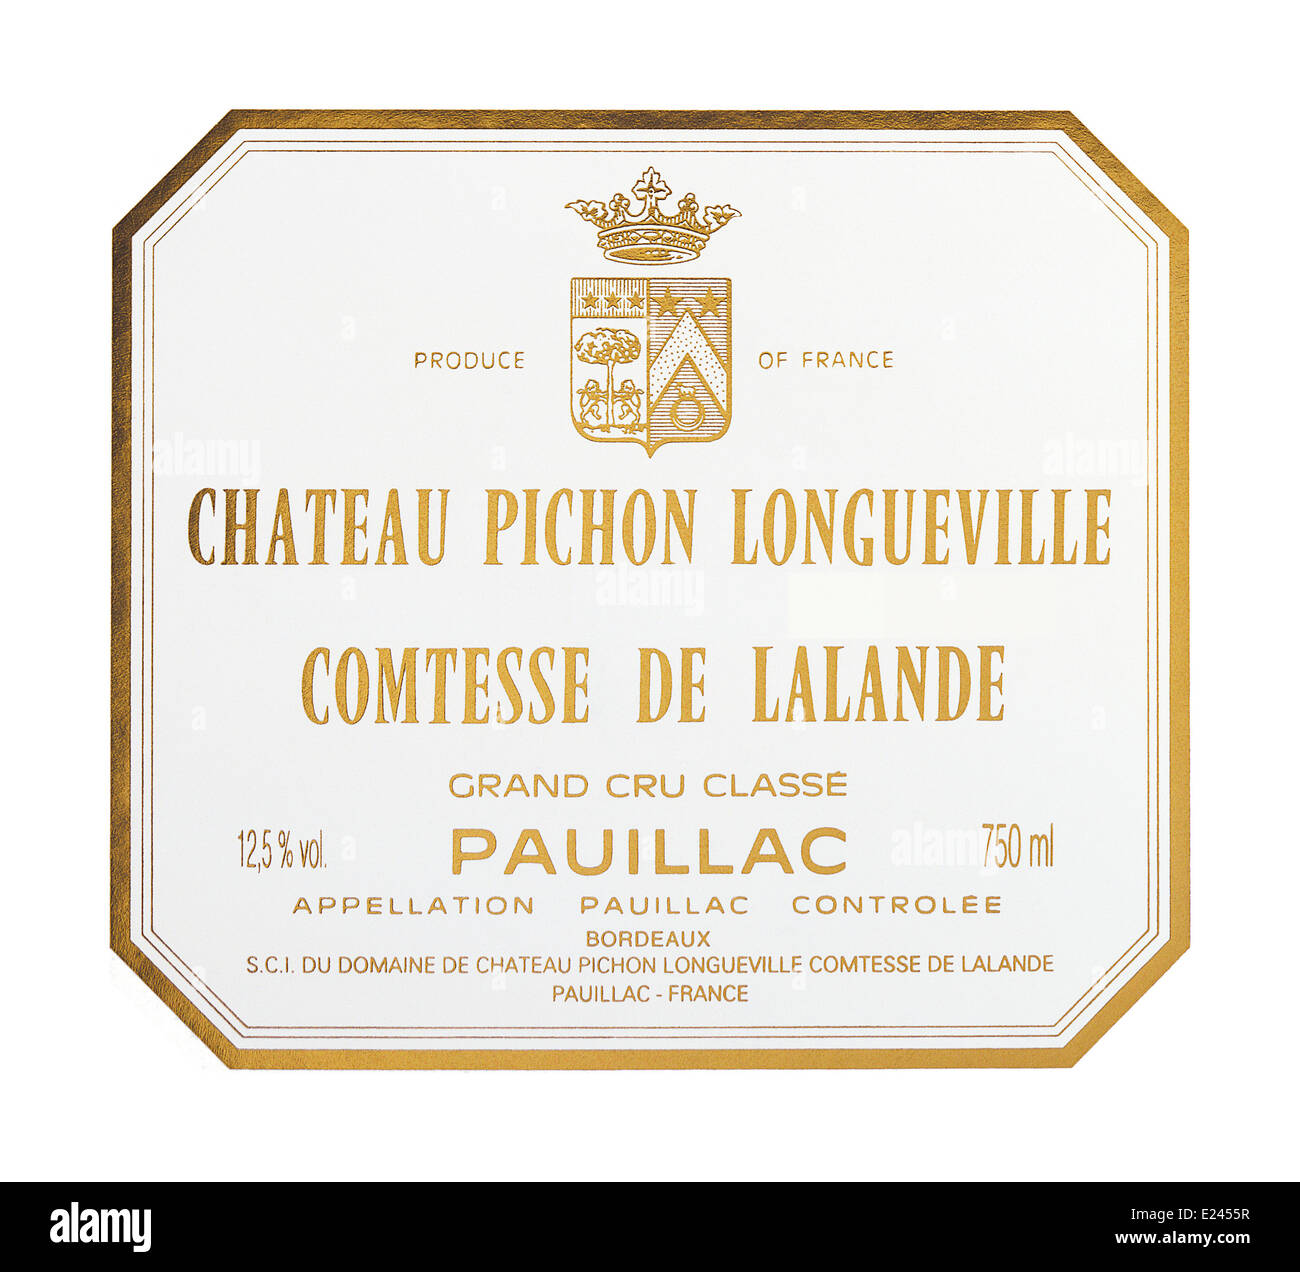 Chateau Pichon Longueville Comtesse de Lalande Grand cru classe Pauillac red wine label Stock Photo